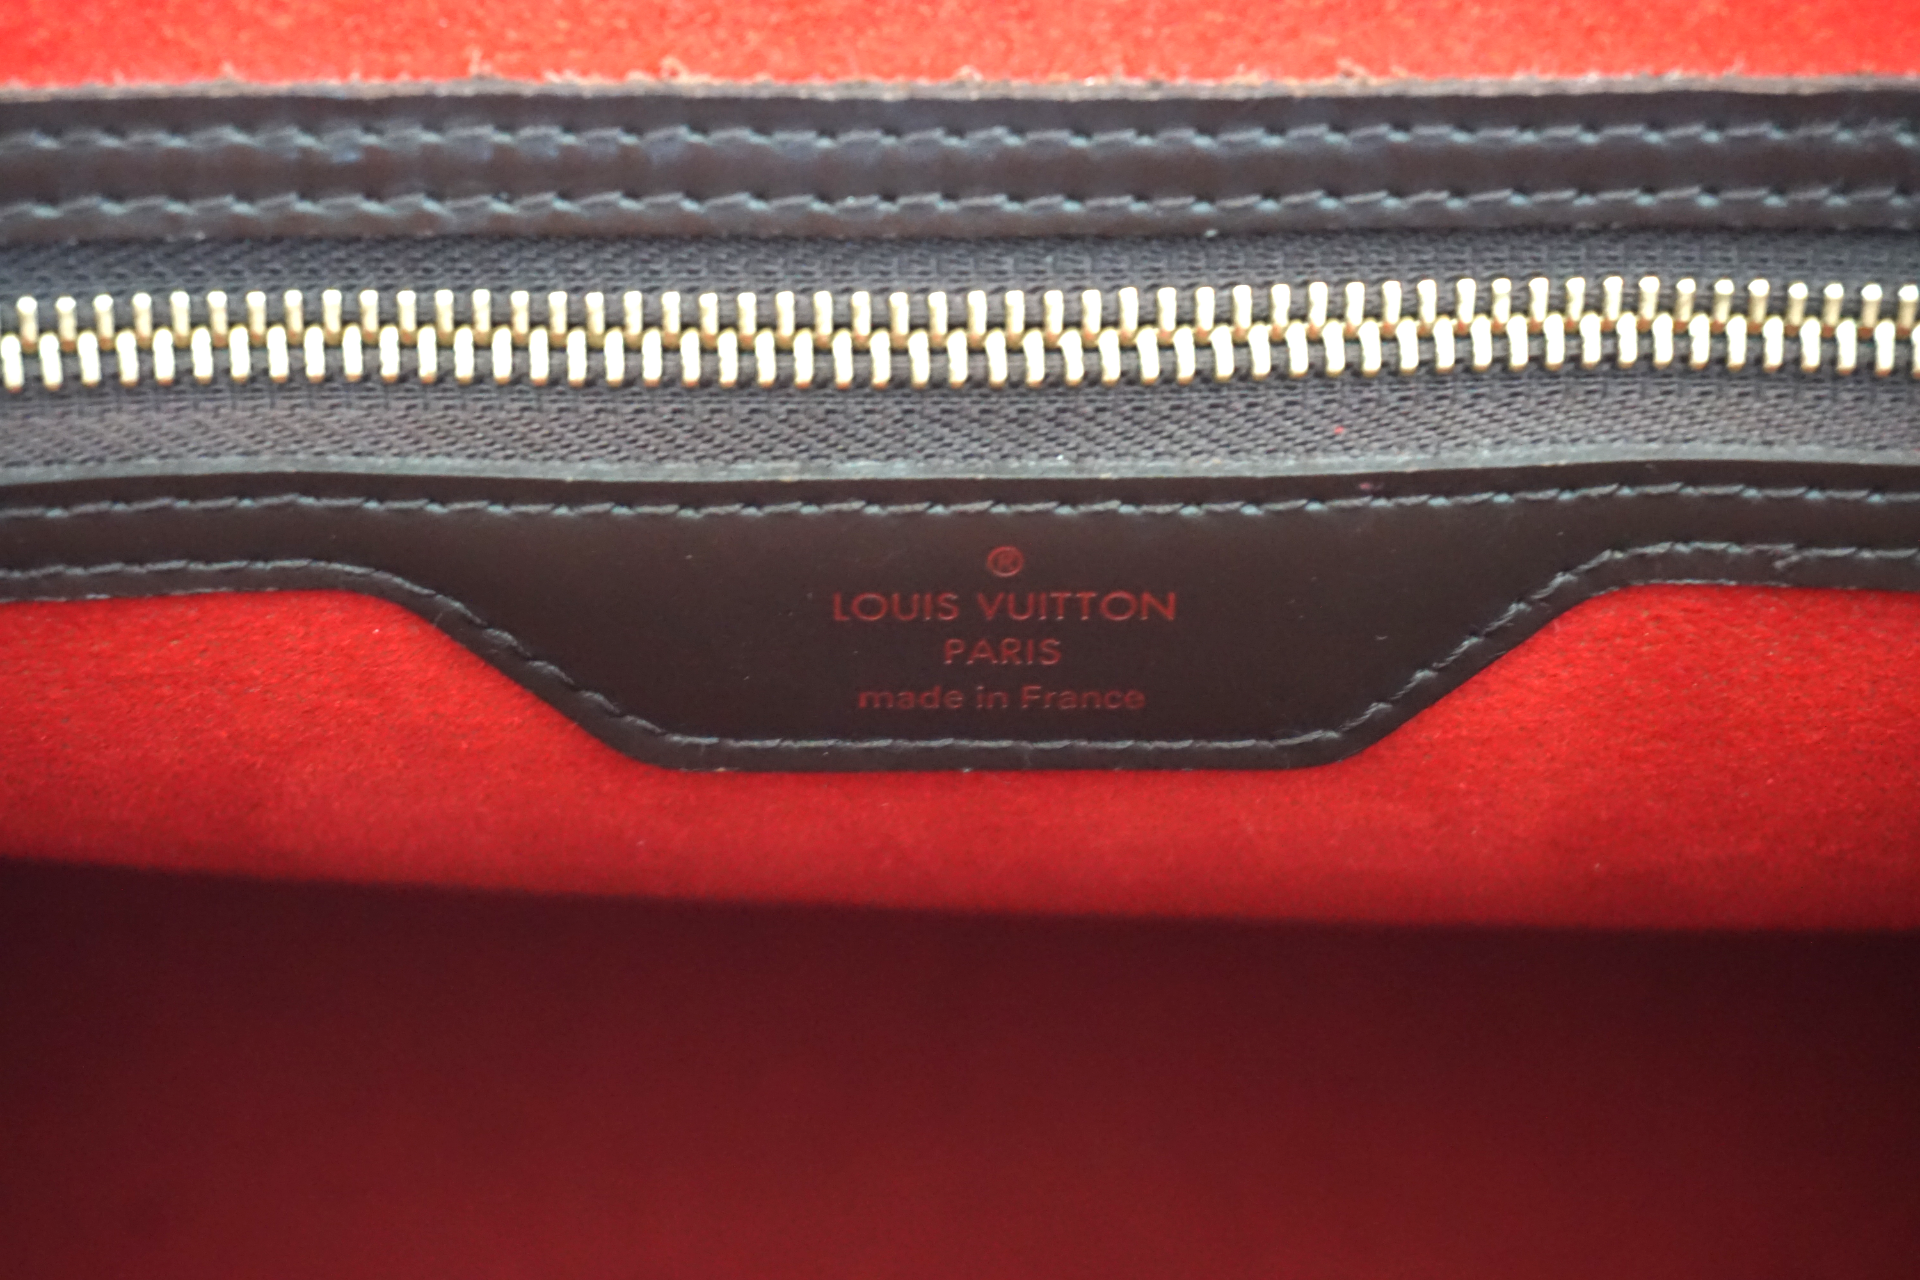 Louis Vuitton Damier Ebene Canvas Bergamo MM Bag